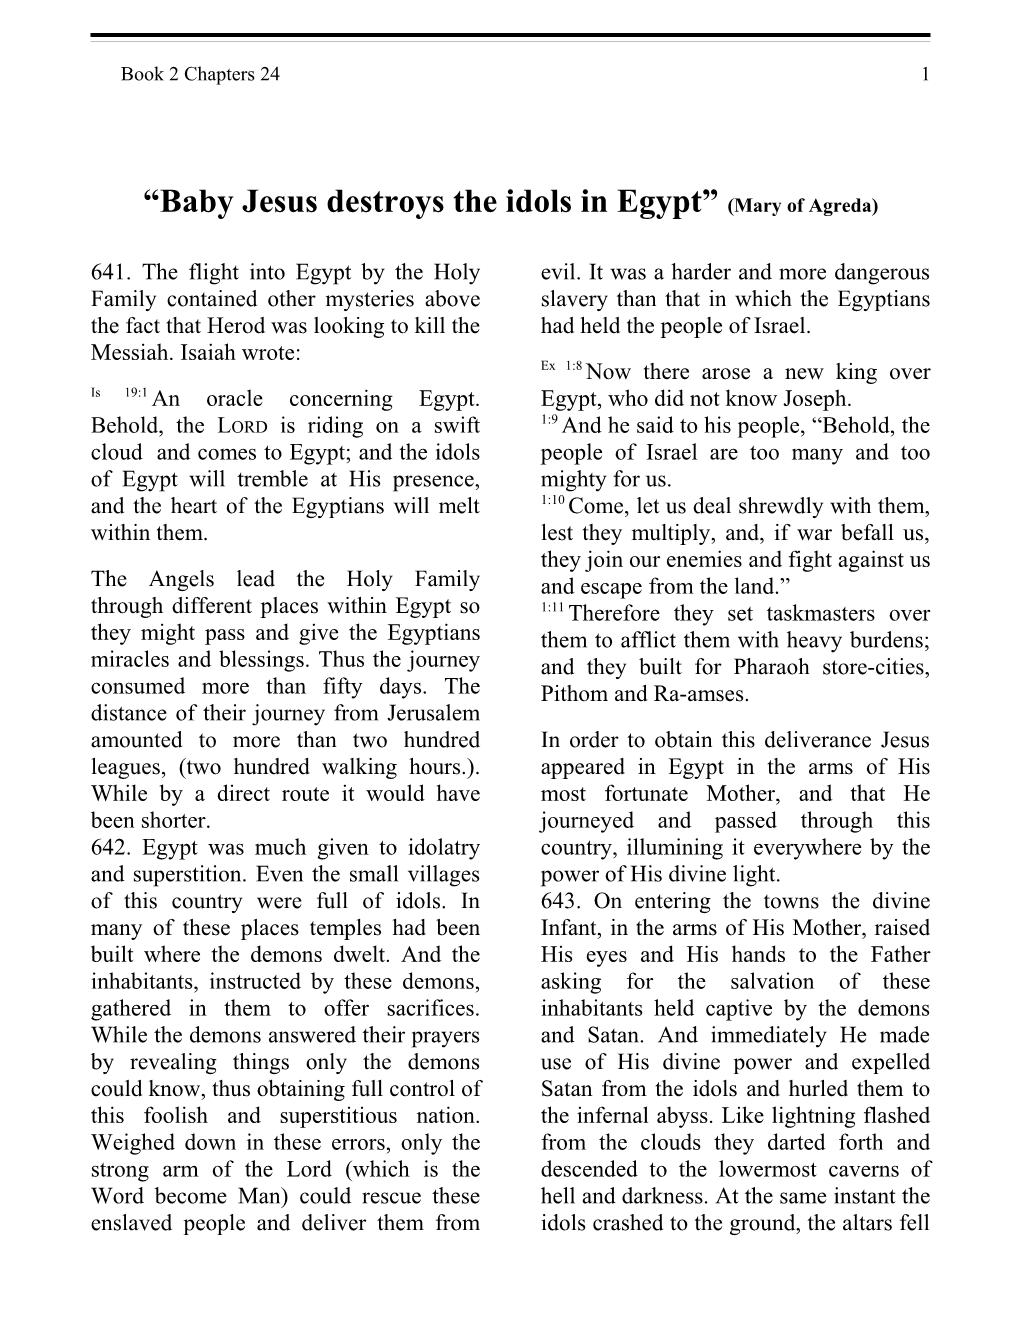 Baby Jesus Destroys the Idols in Egypt (Mary of Agreda)